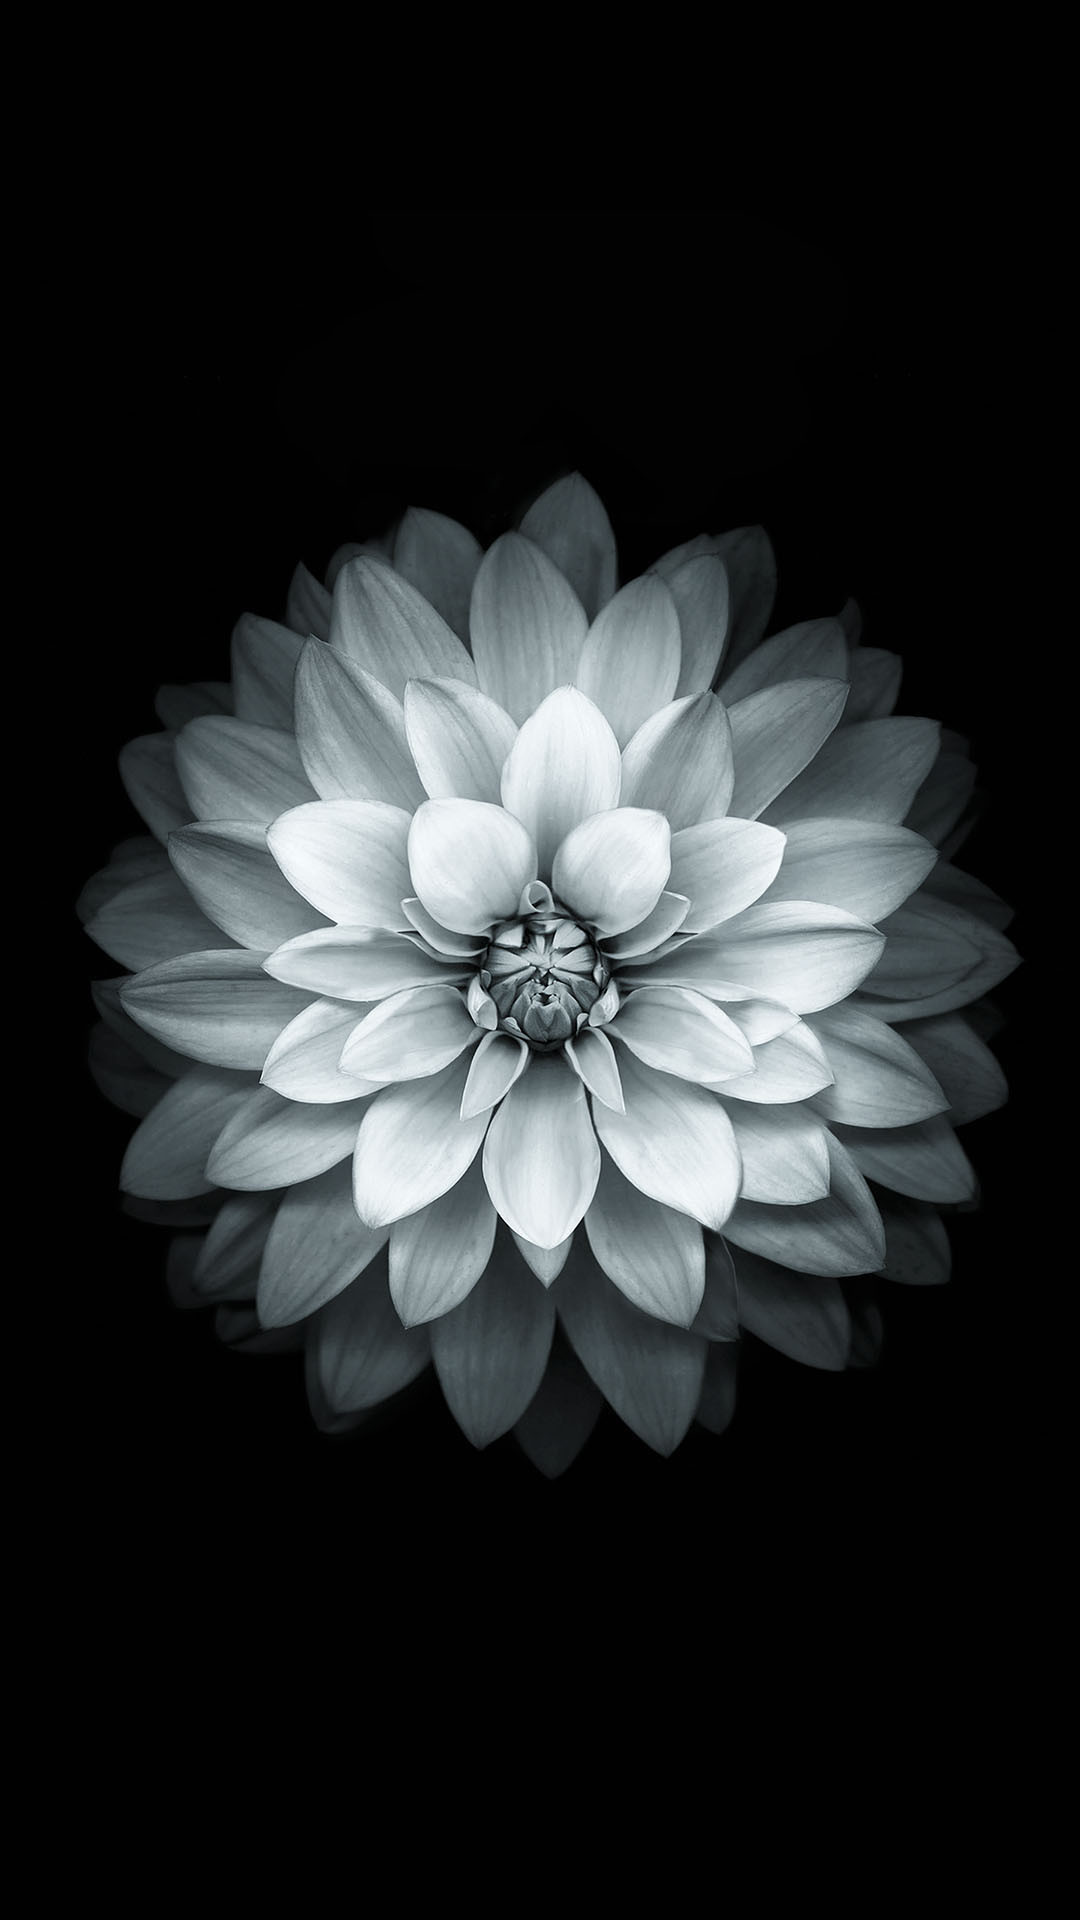 1080x1920 Black White Apple Lotus Flower Android Wallpaper ...